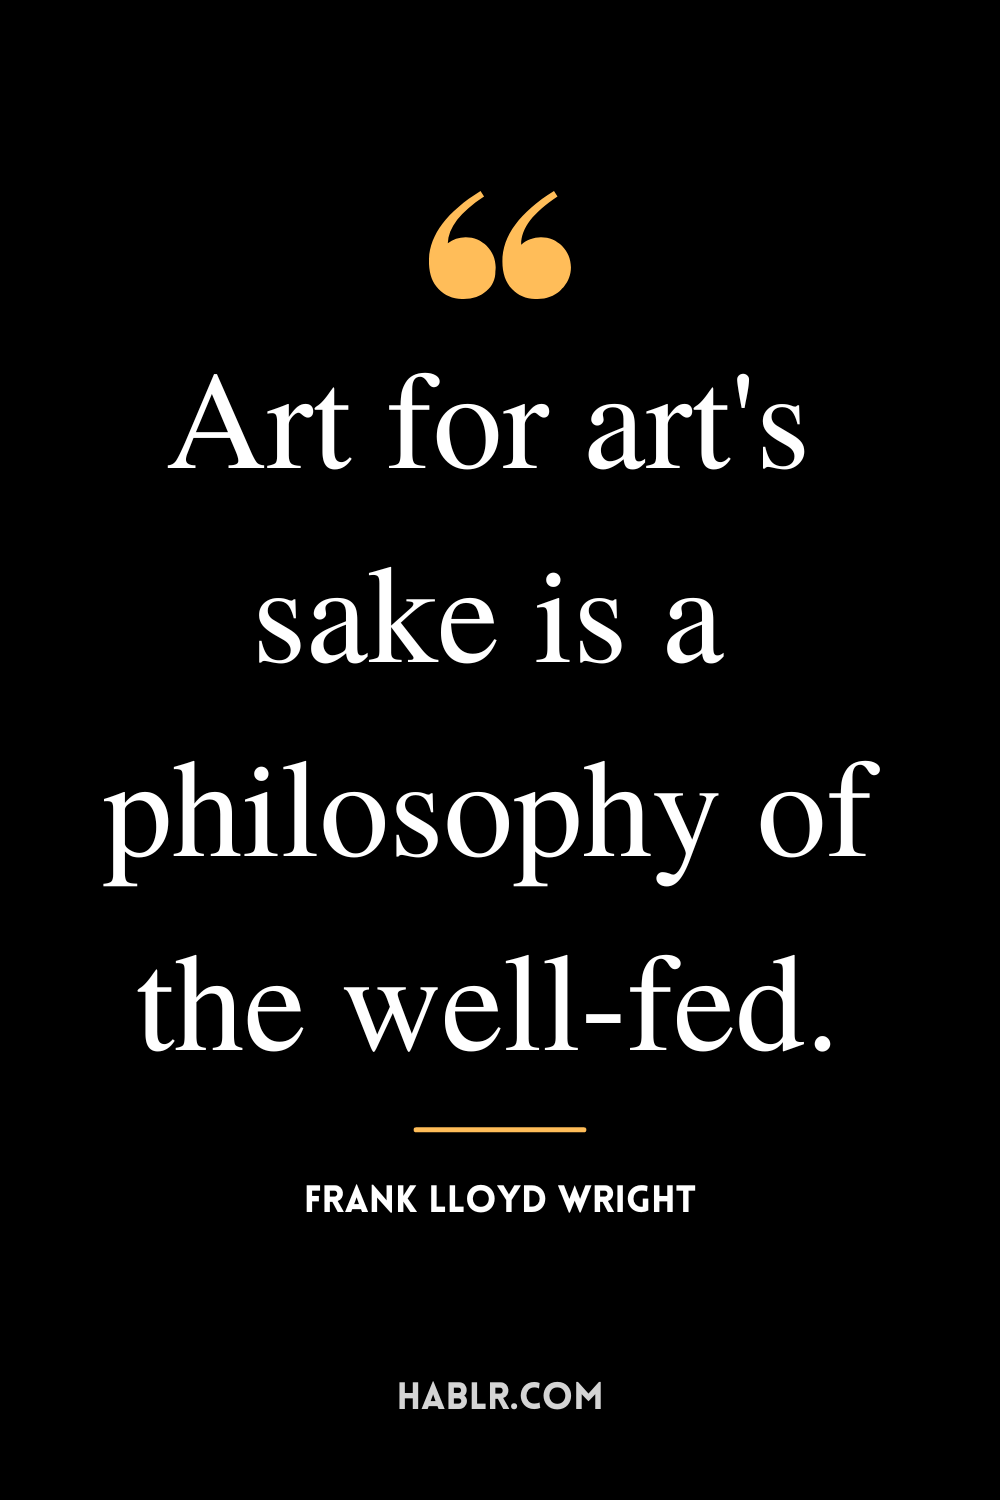 "Art for art's sake is a philosophy of the well-fed." -Frank Lloyd Wright